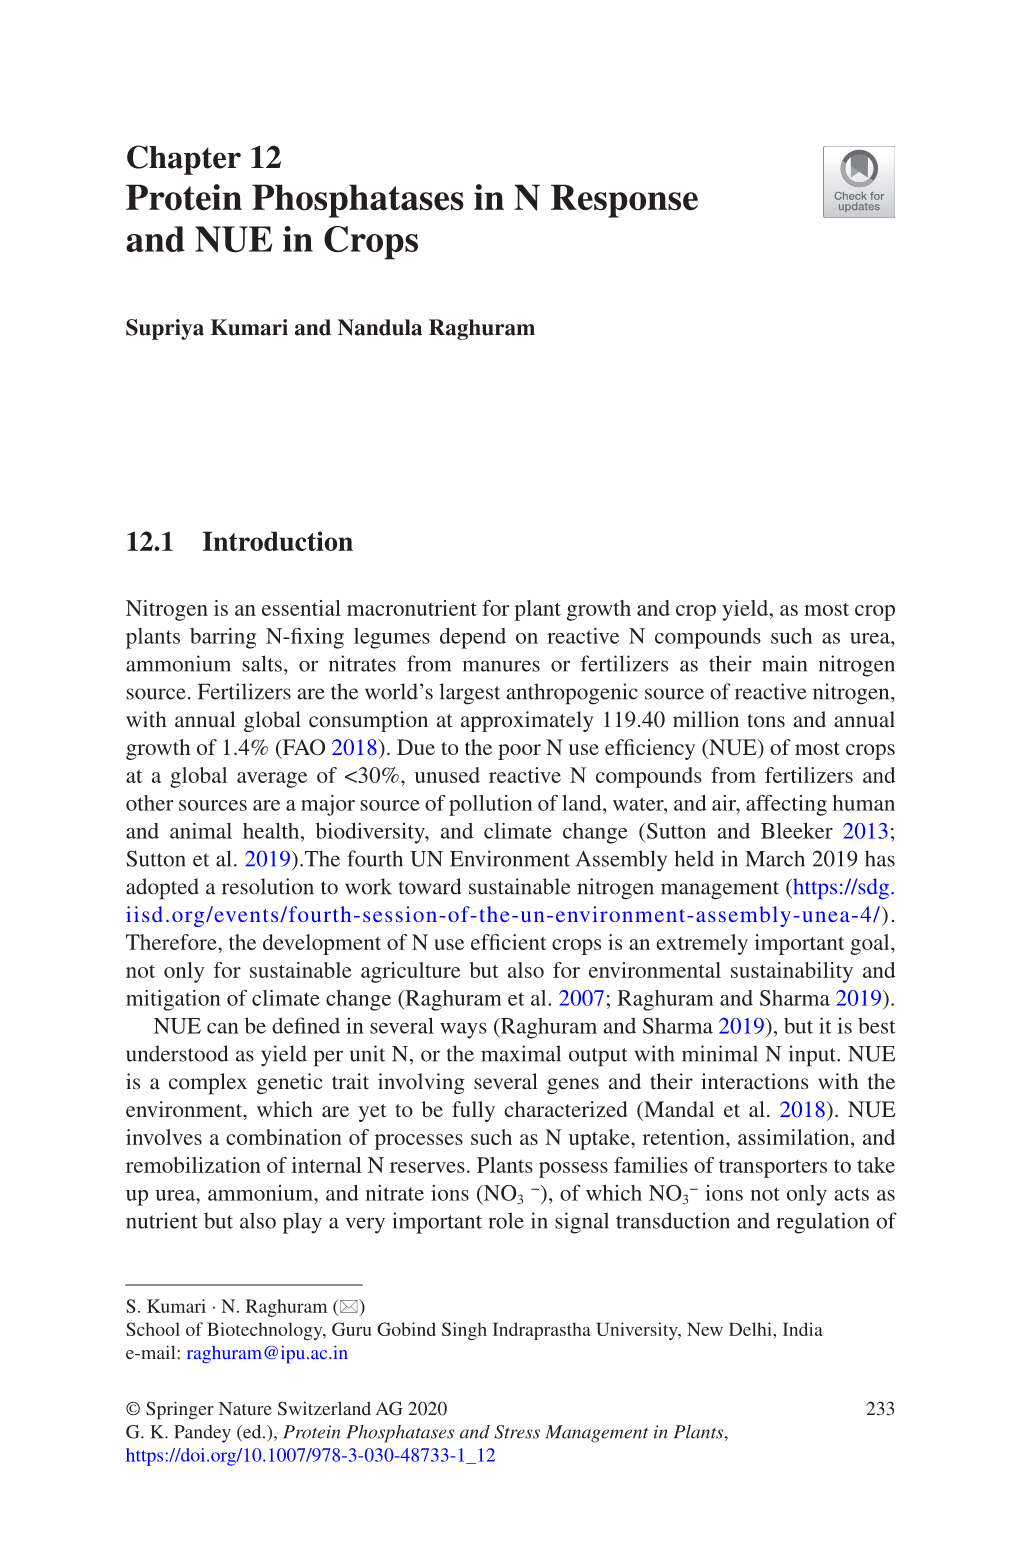 Protein Phosphatases in N Response and NUE in Crops